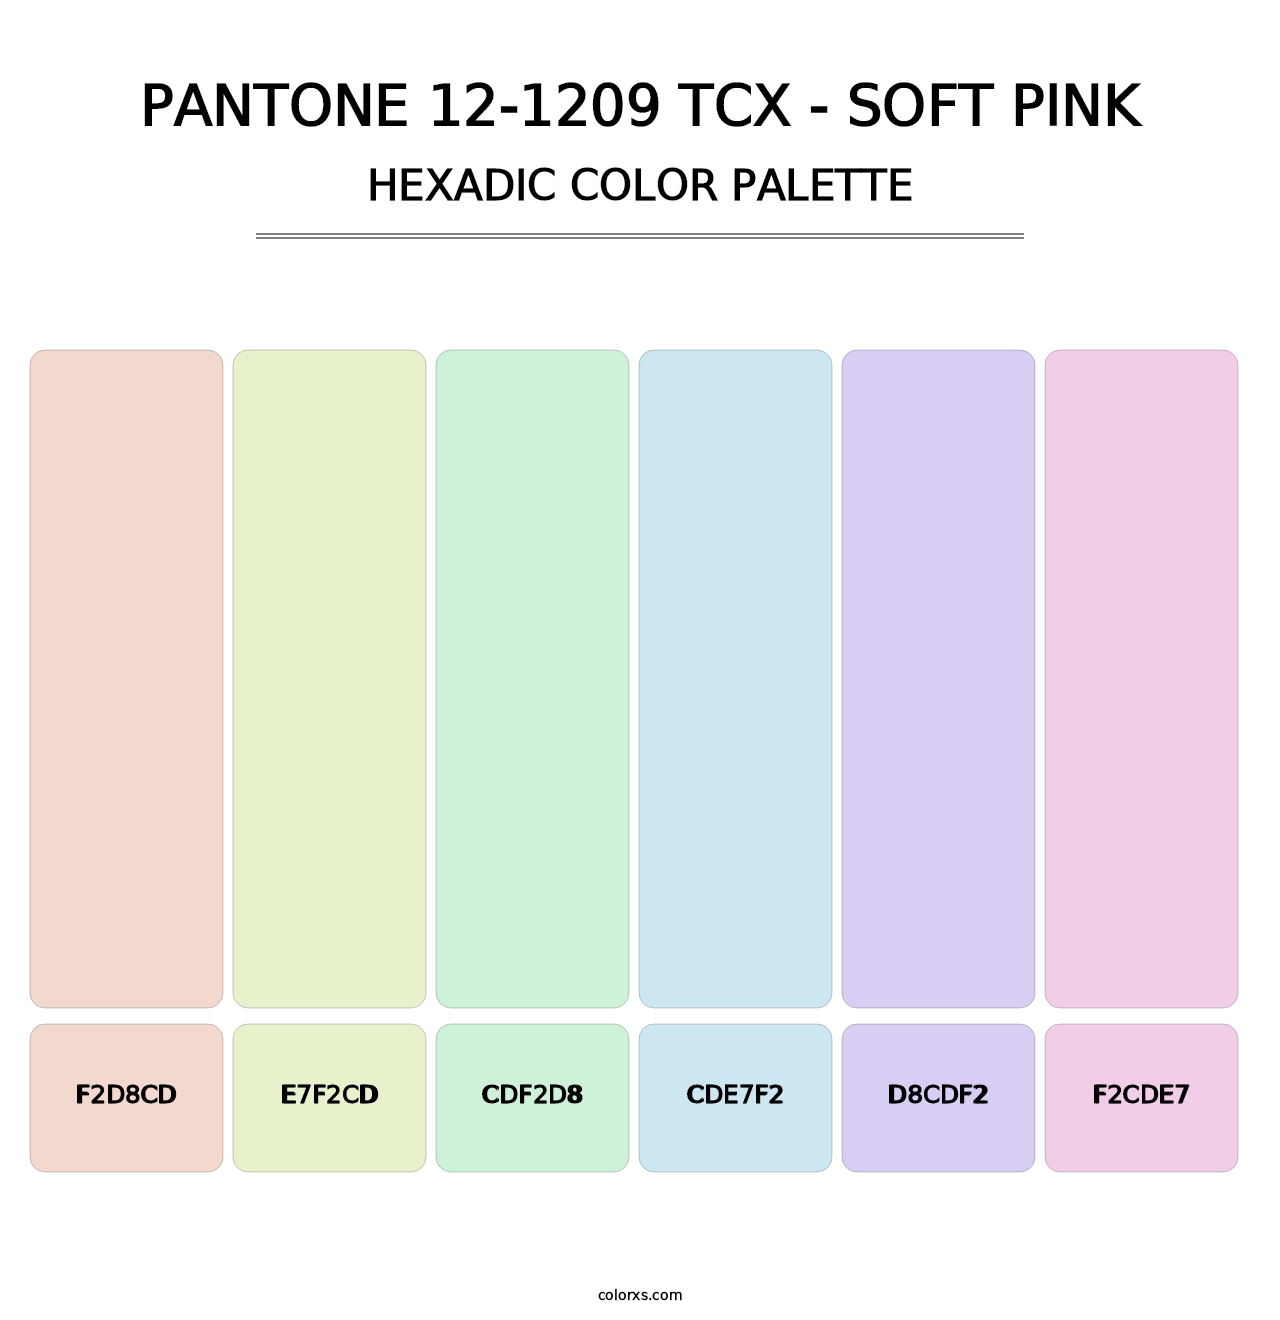 PANTONE 12-1209 TCX - Soft Pink - Hexadic Color Palette